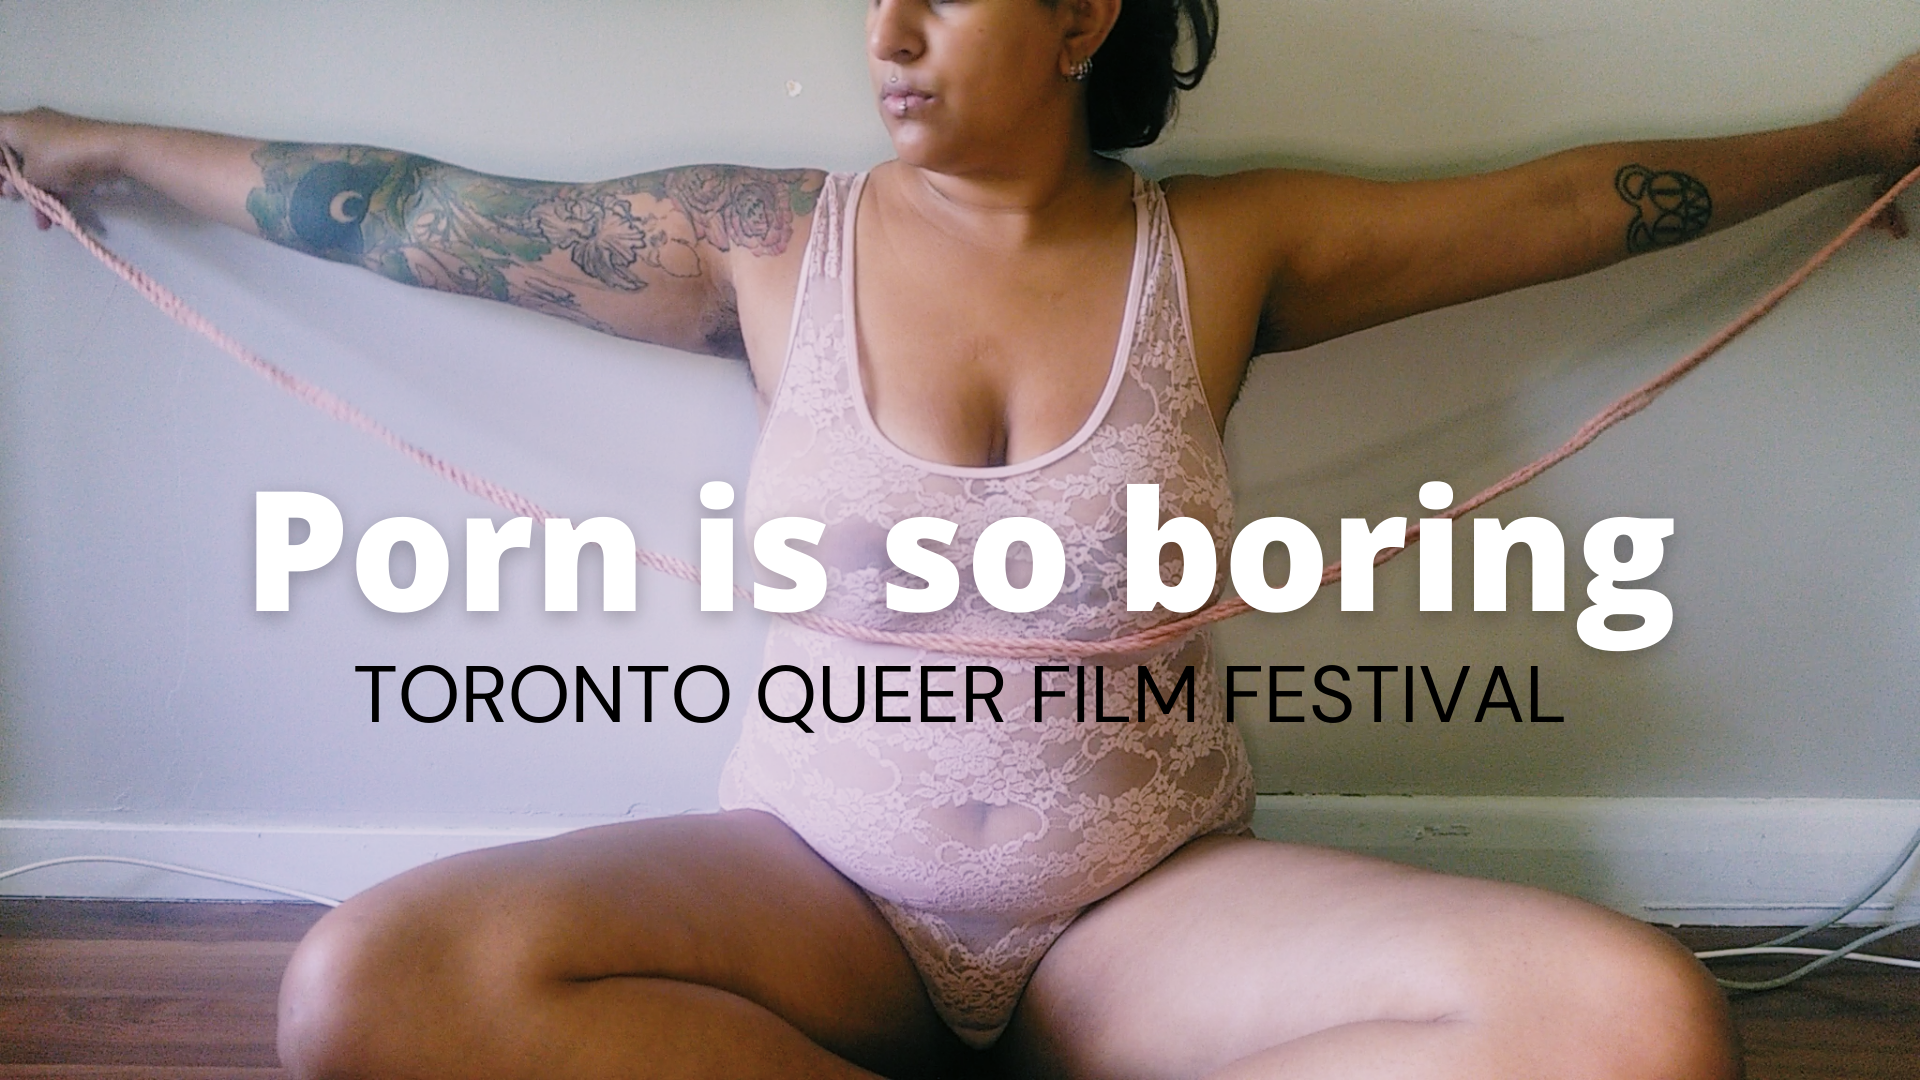 Horror porn i in Toronto